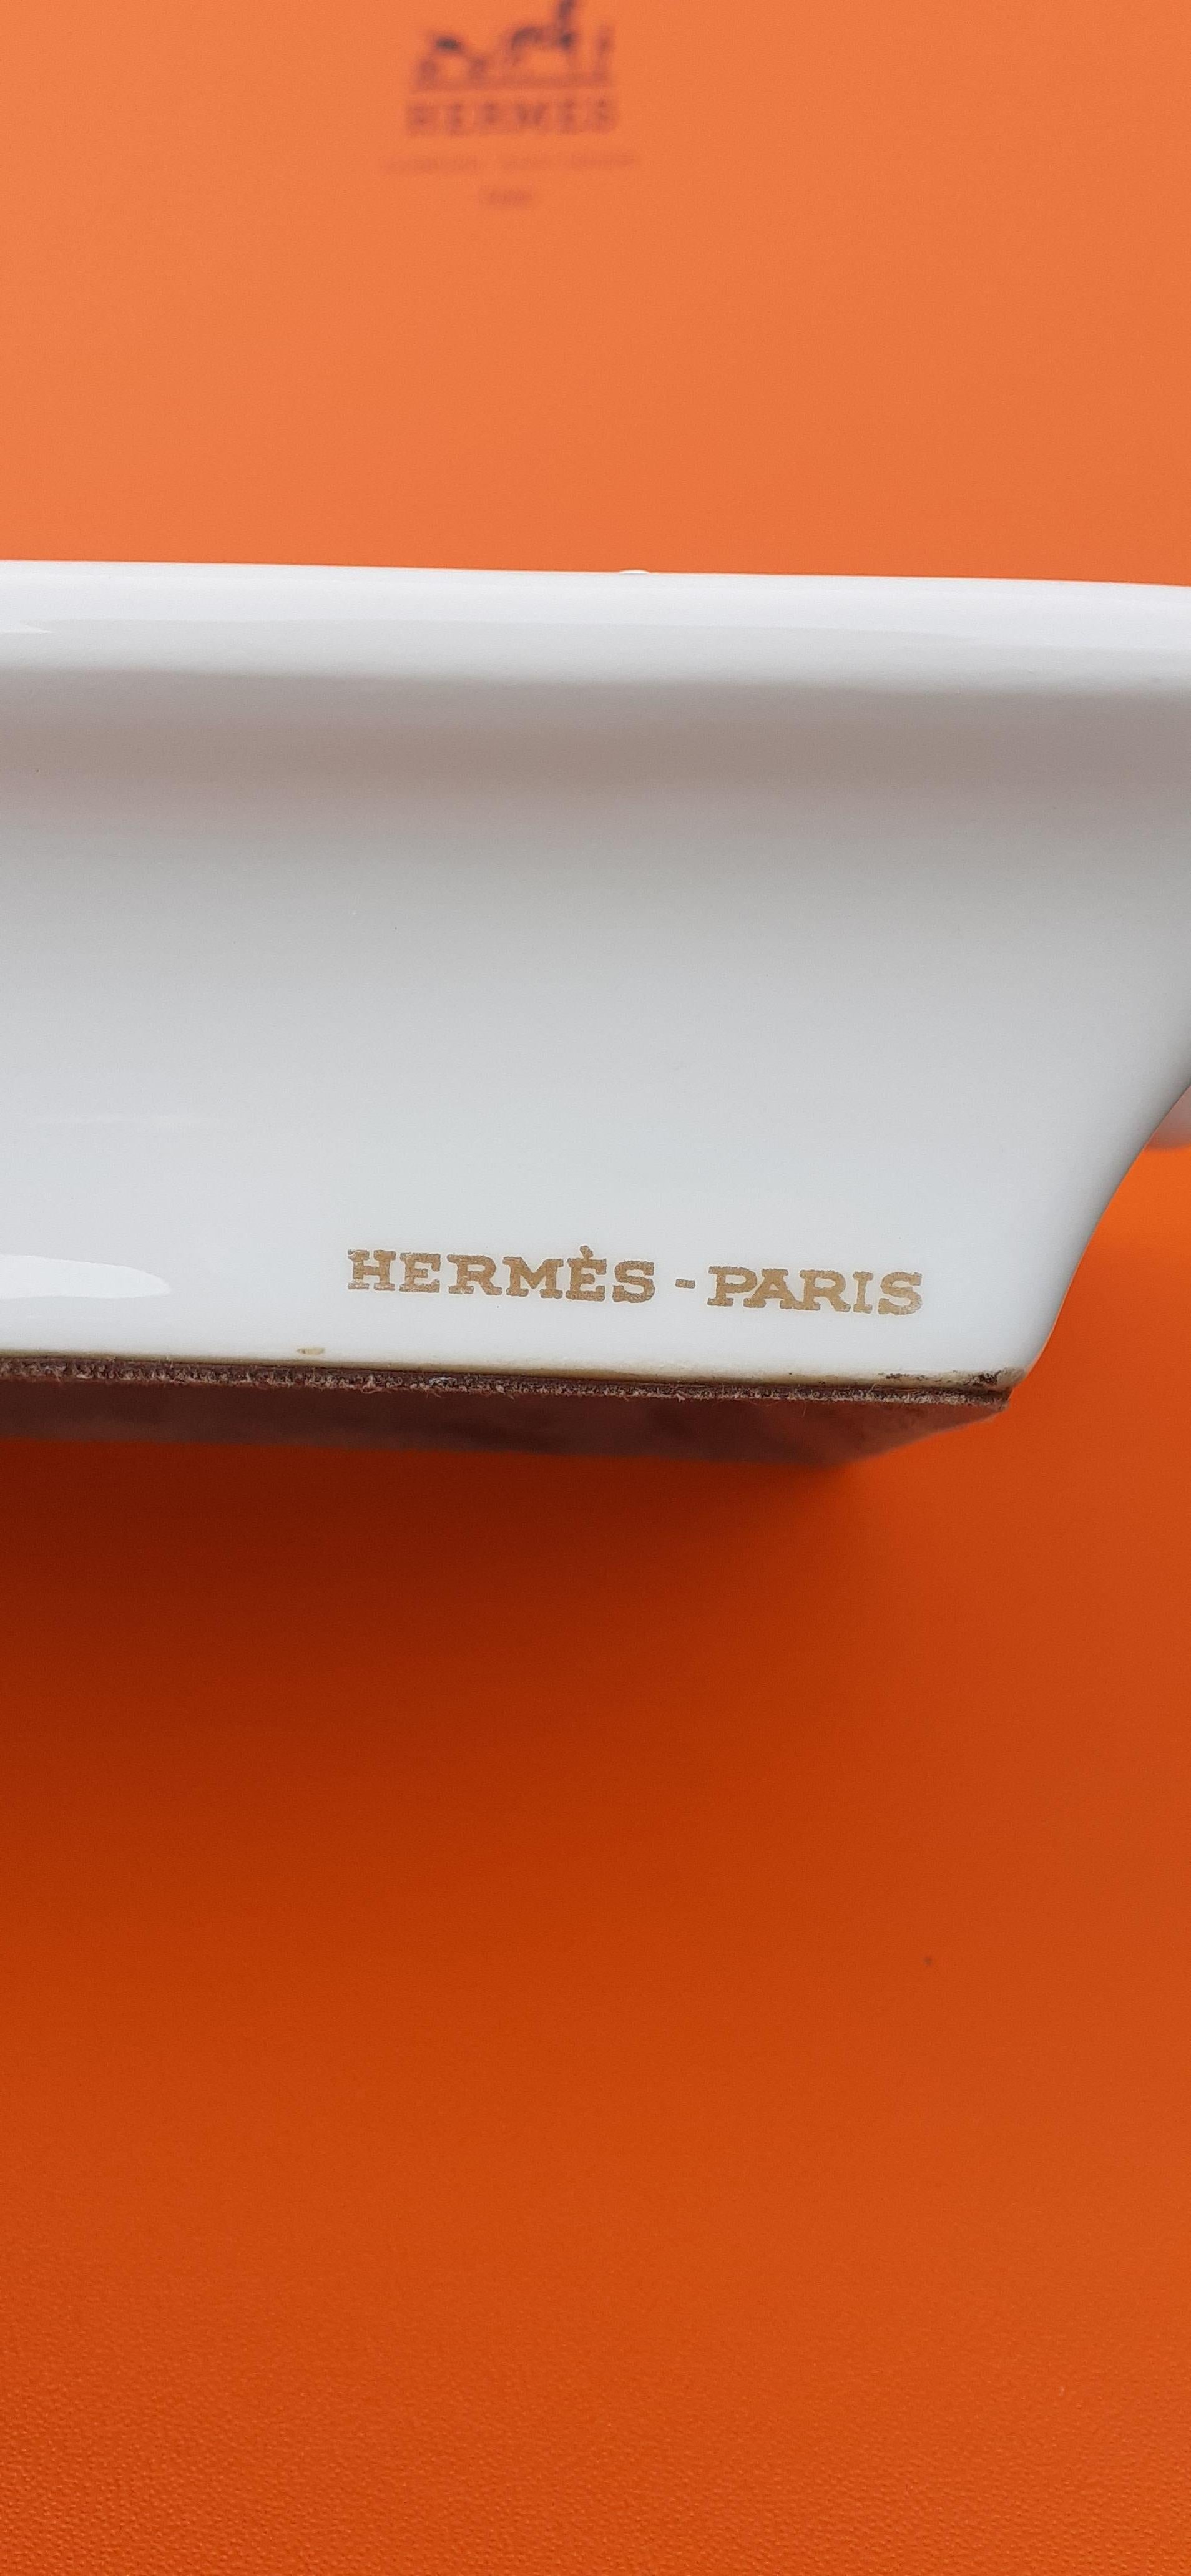 Hermès Vintage Porcelain Ashtray Change Tray The Seahorse Mythology in Porcelain 7